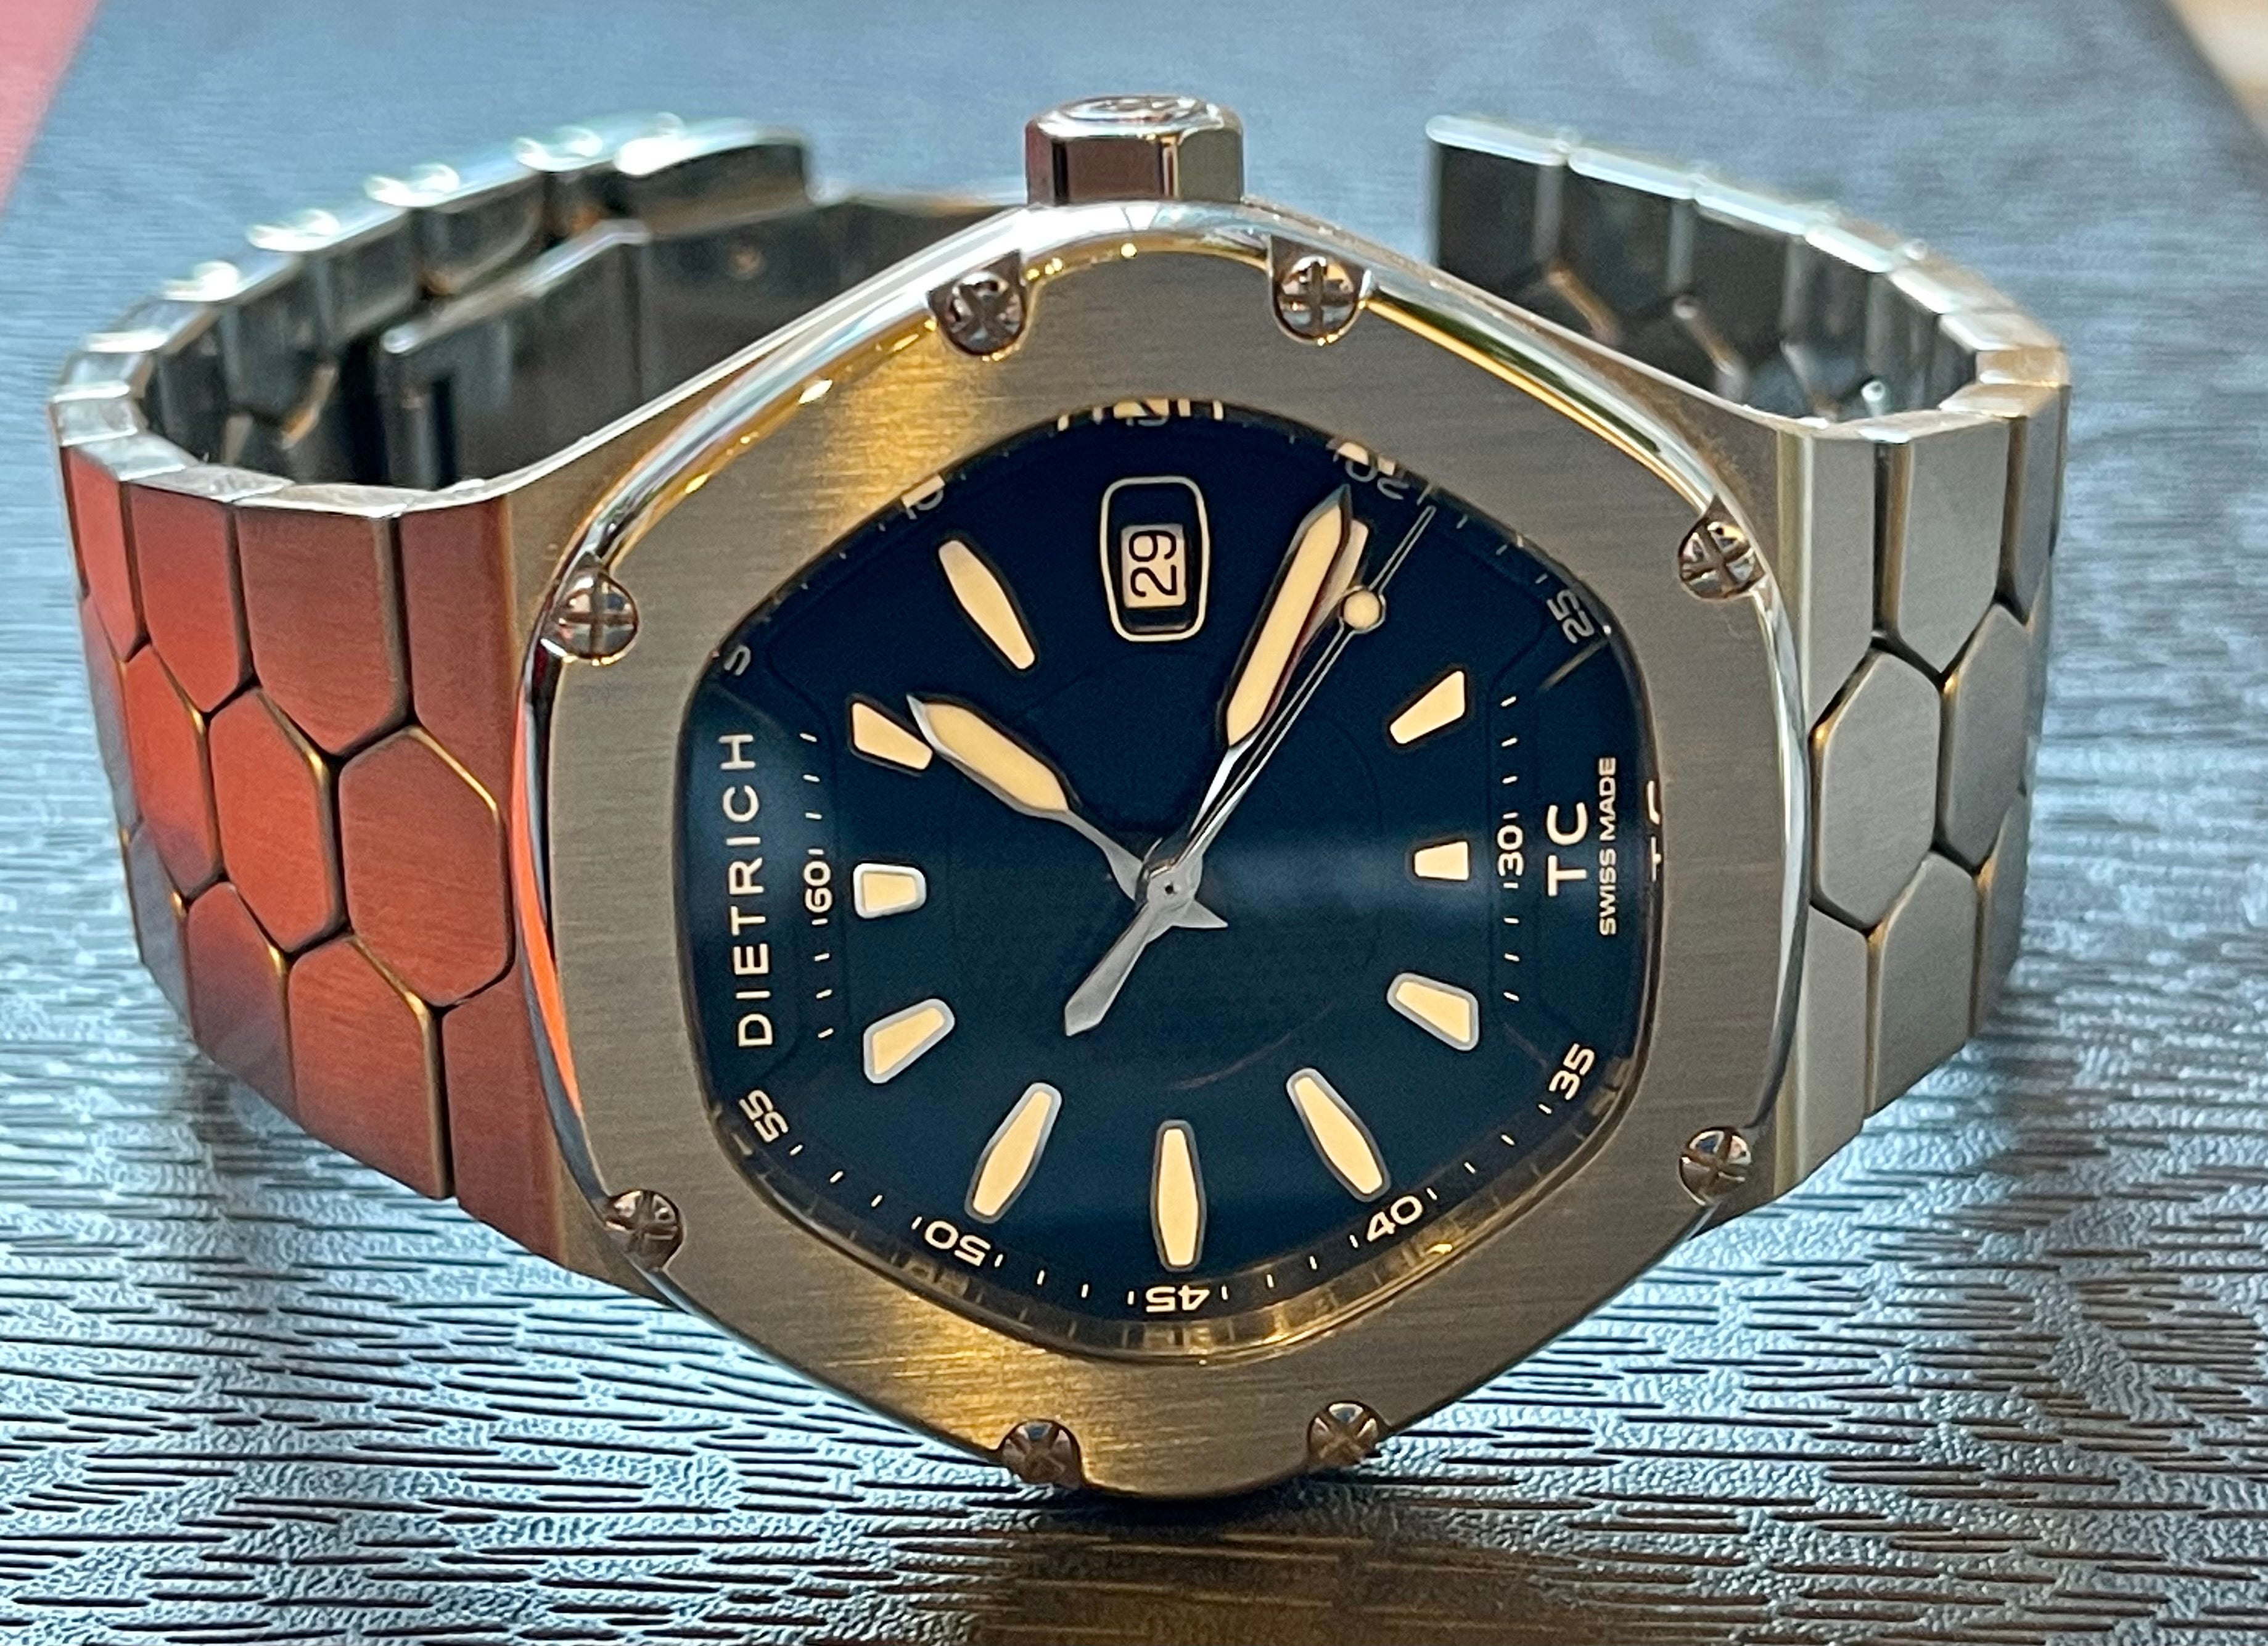 Dietrich Time Companion TC-1 Blue [SOLD] | WatchUSeek Watch Forums